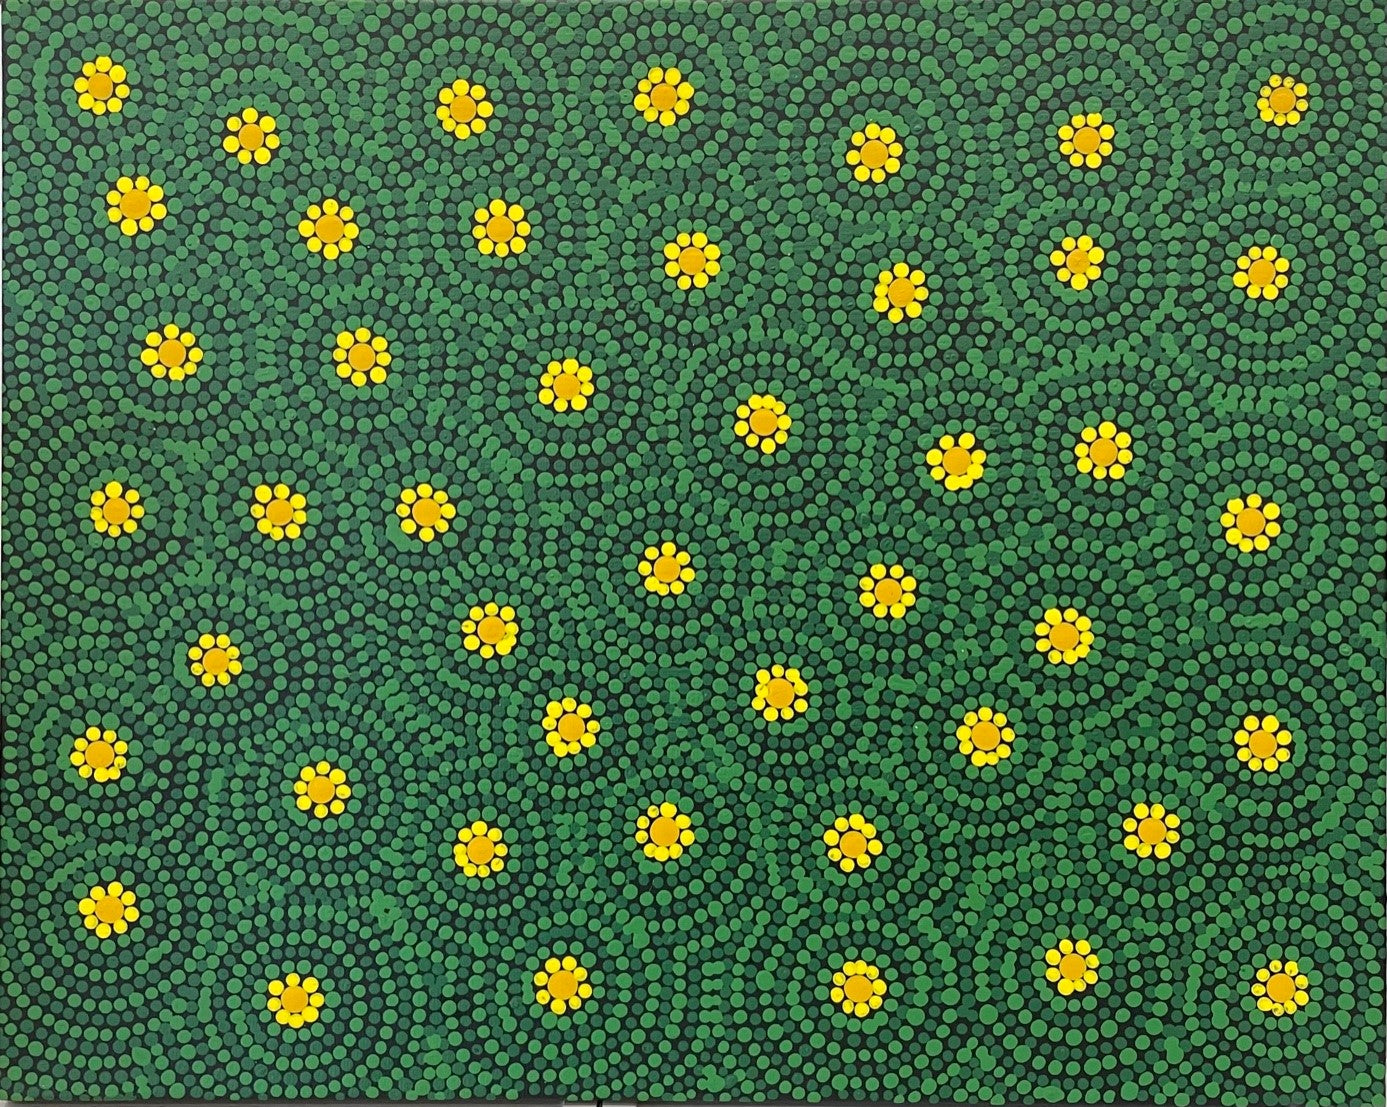 Field of Dandelions- Framed on canvas - Stephen Berger (Arrernte)